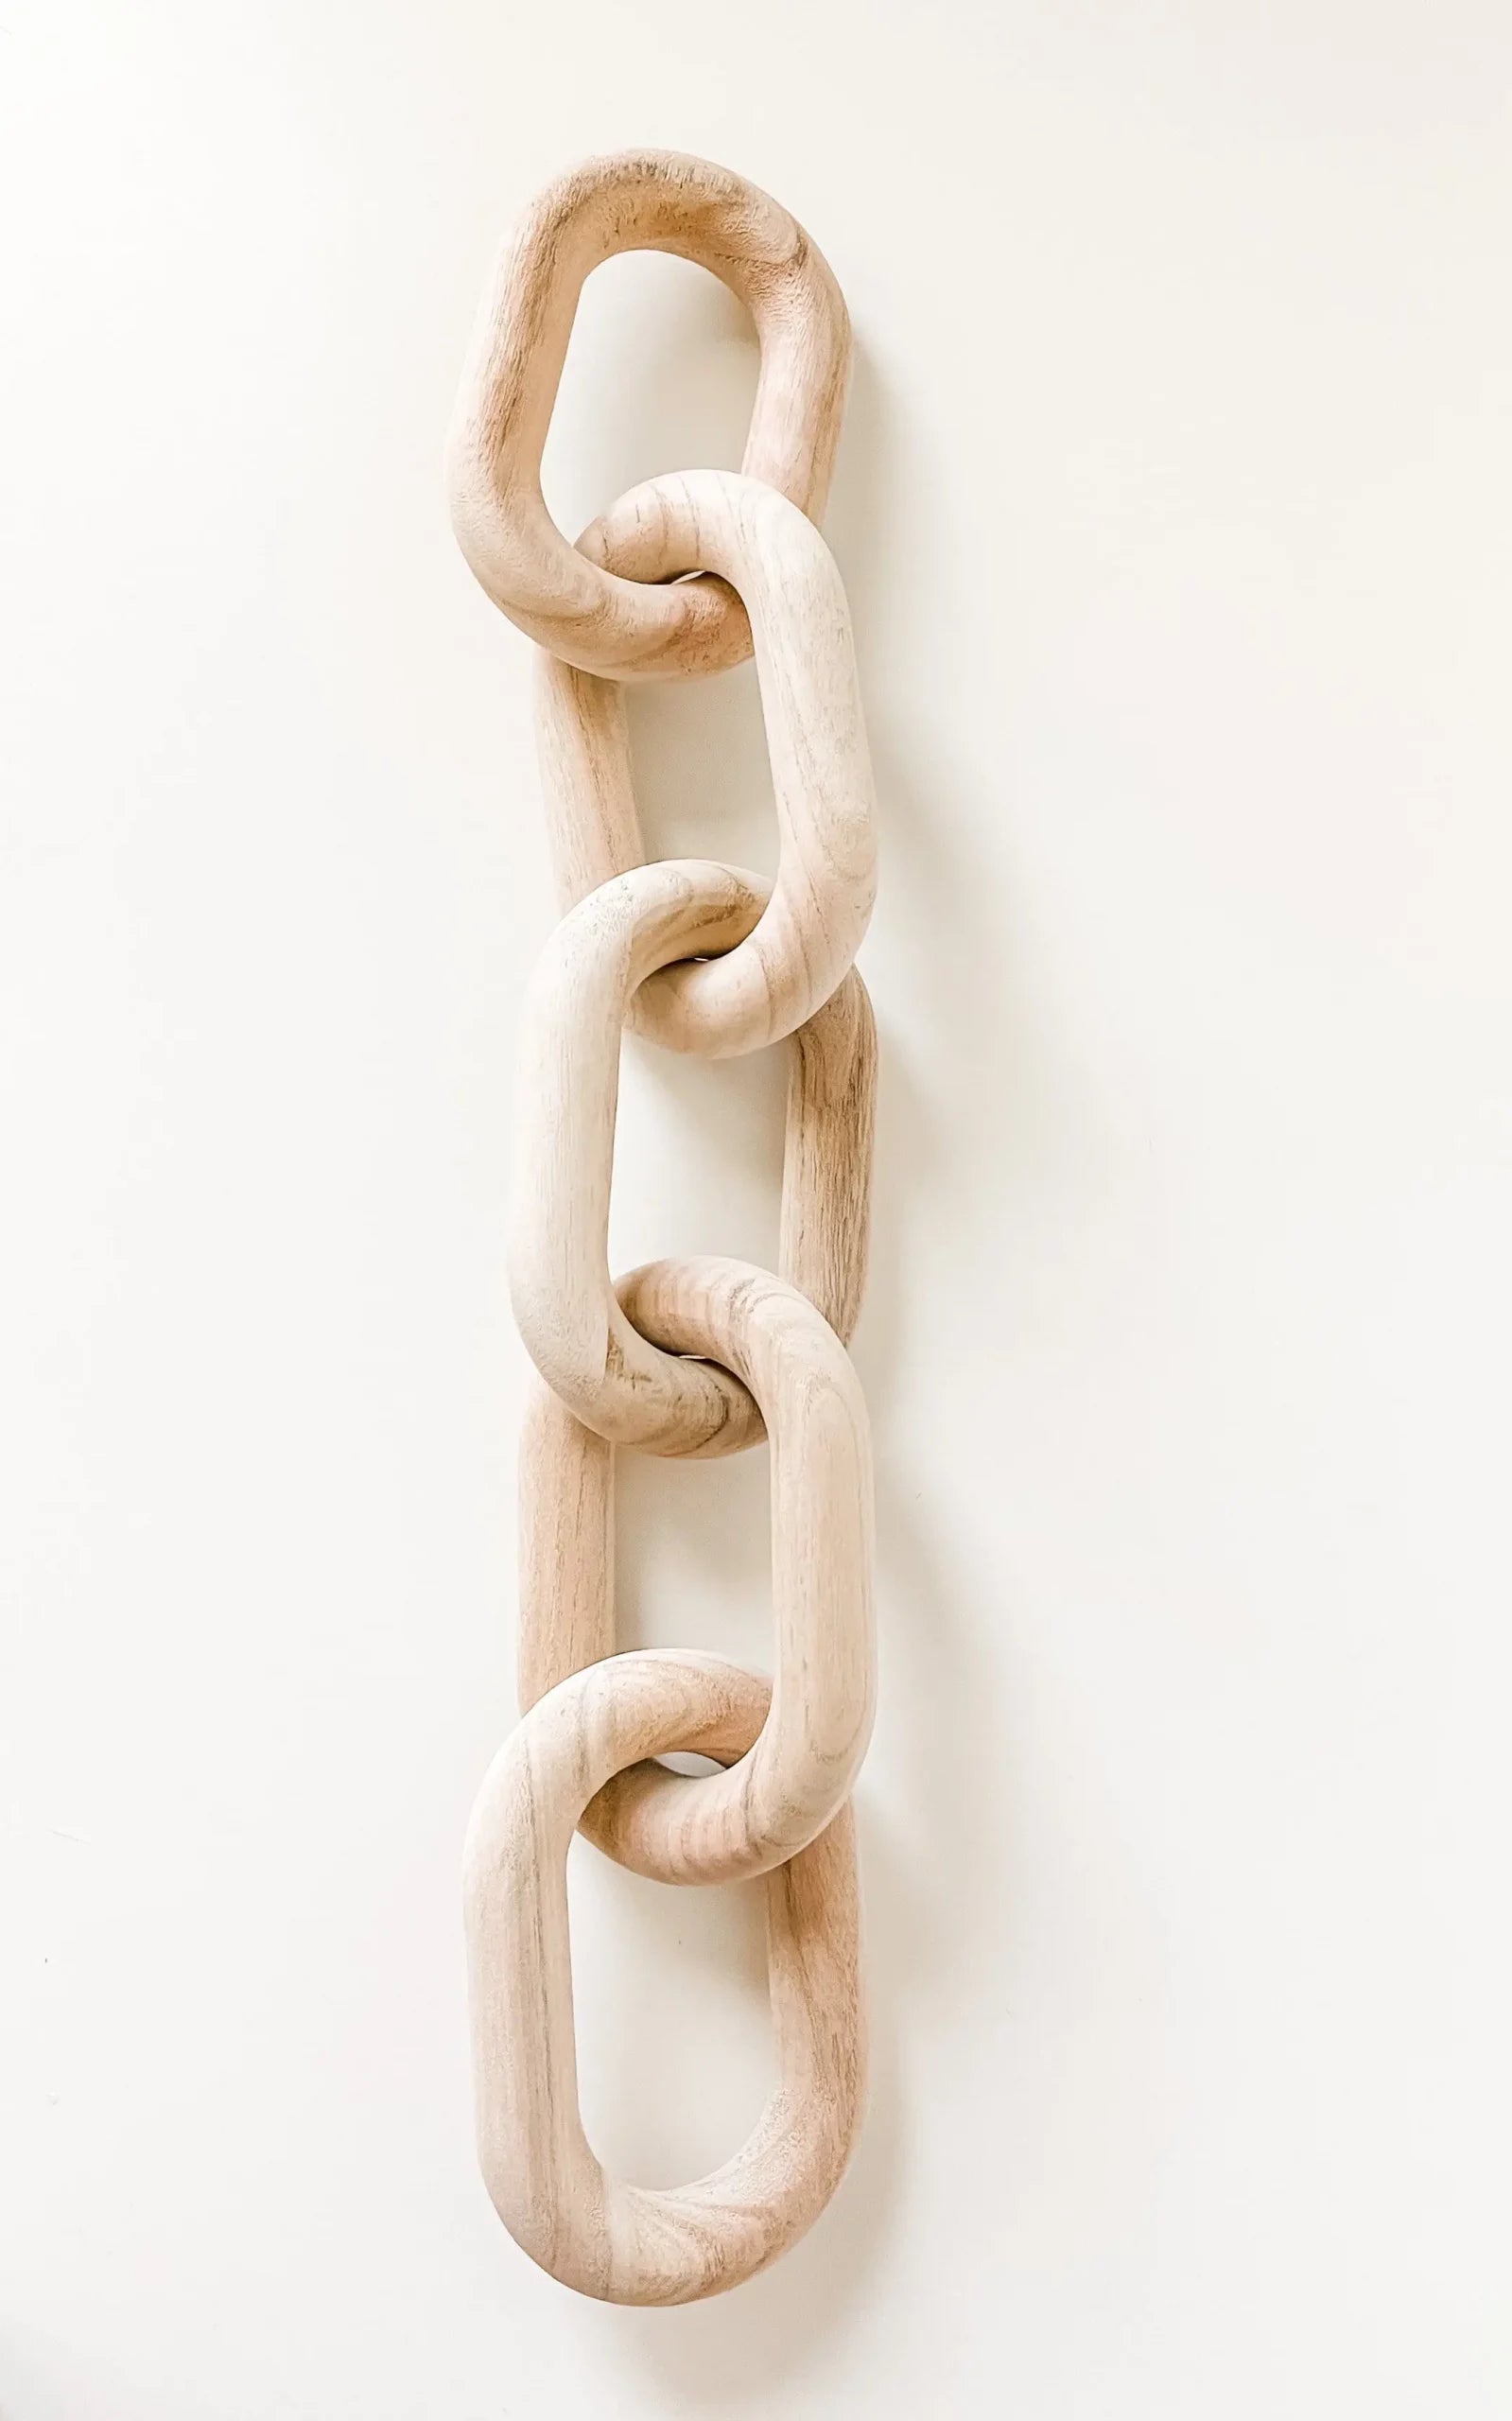 Wood Chain Link Decor, Wood Decor, Wood Decorations, Wood Home Decor